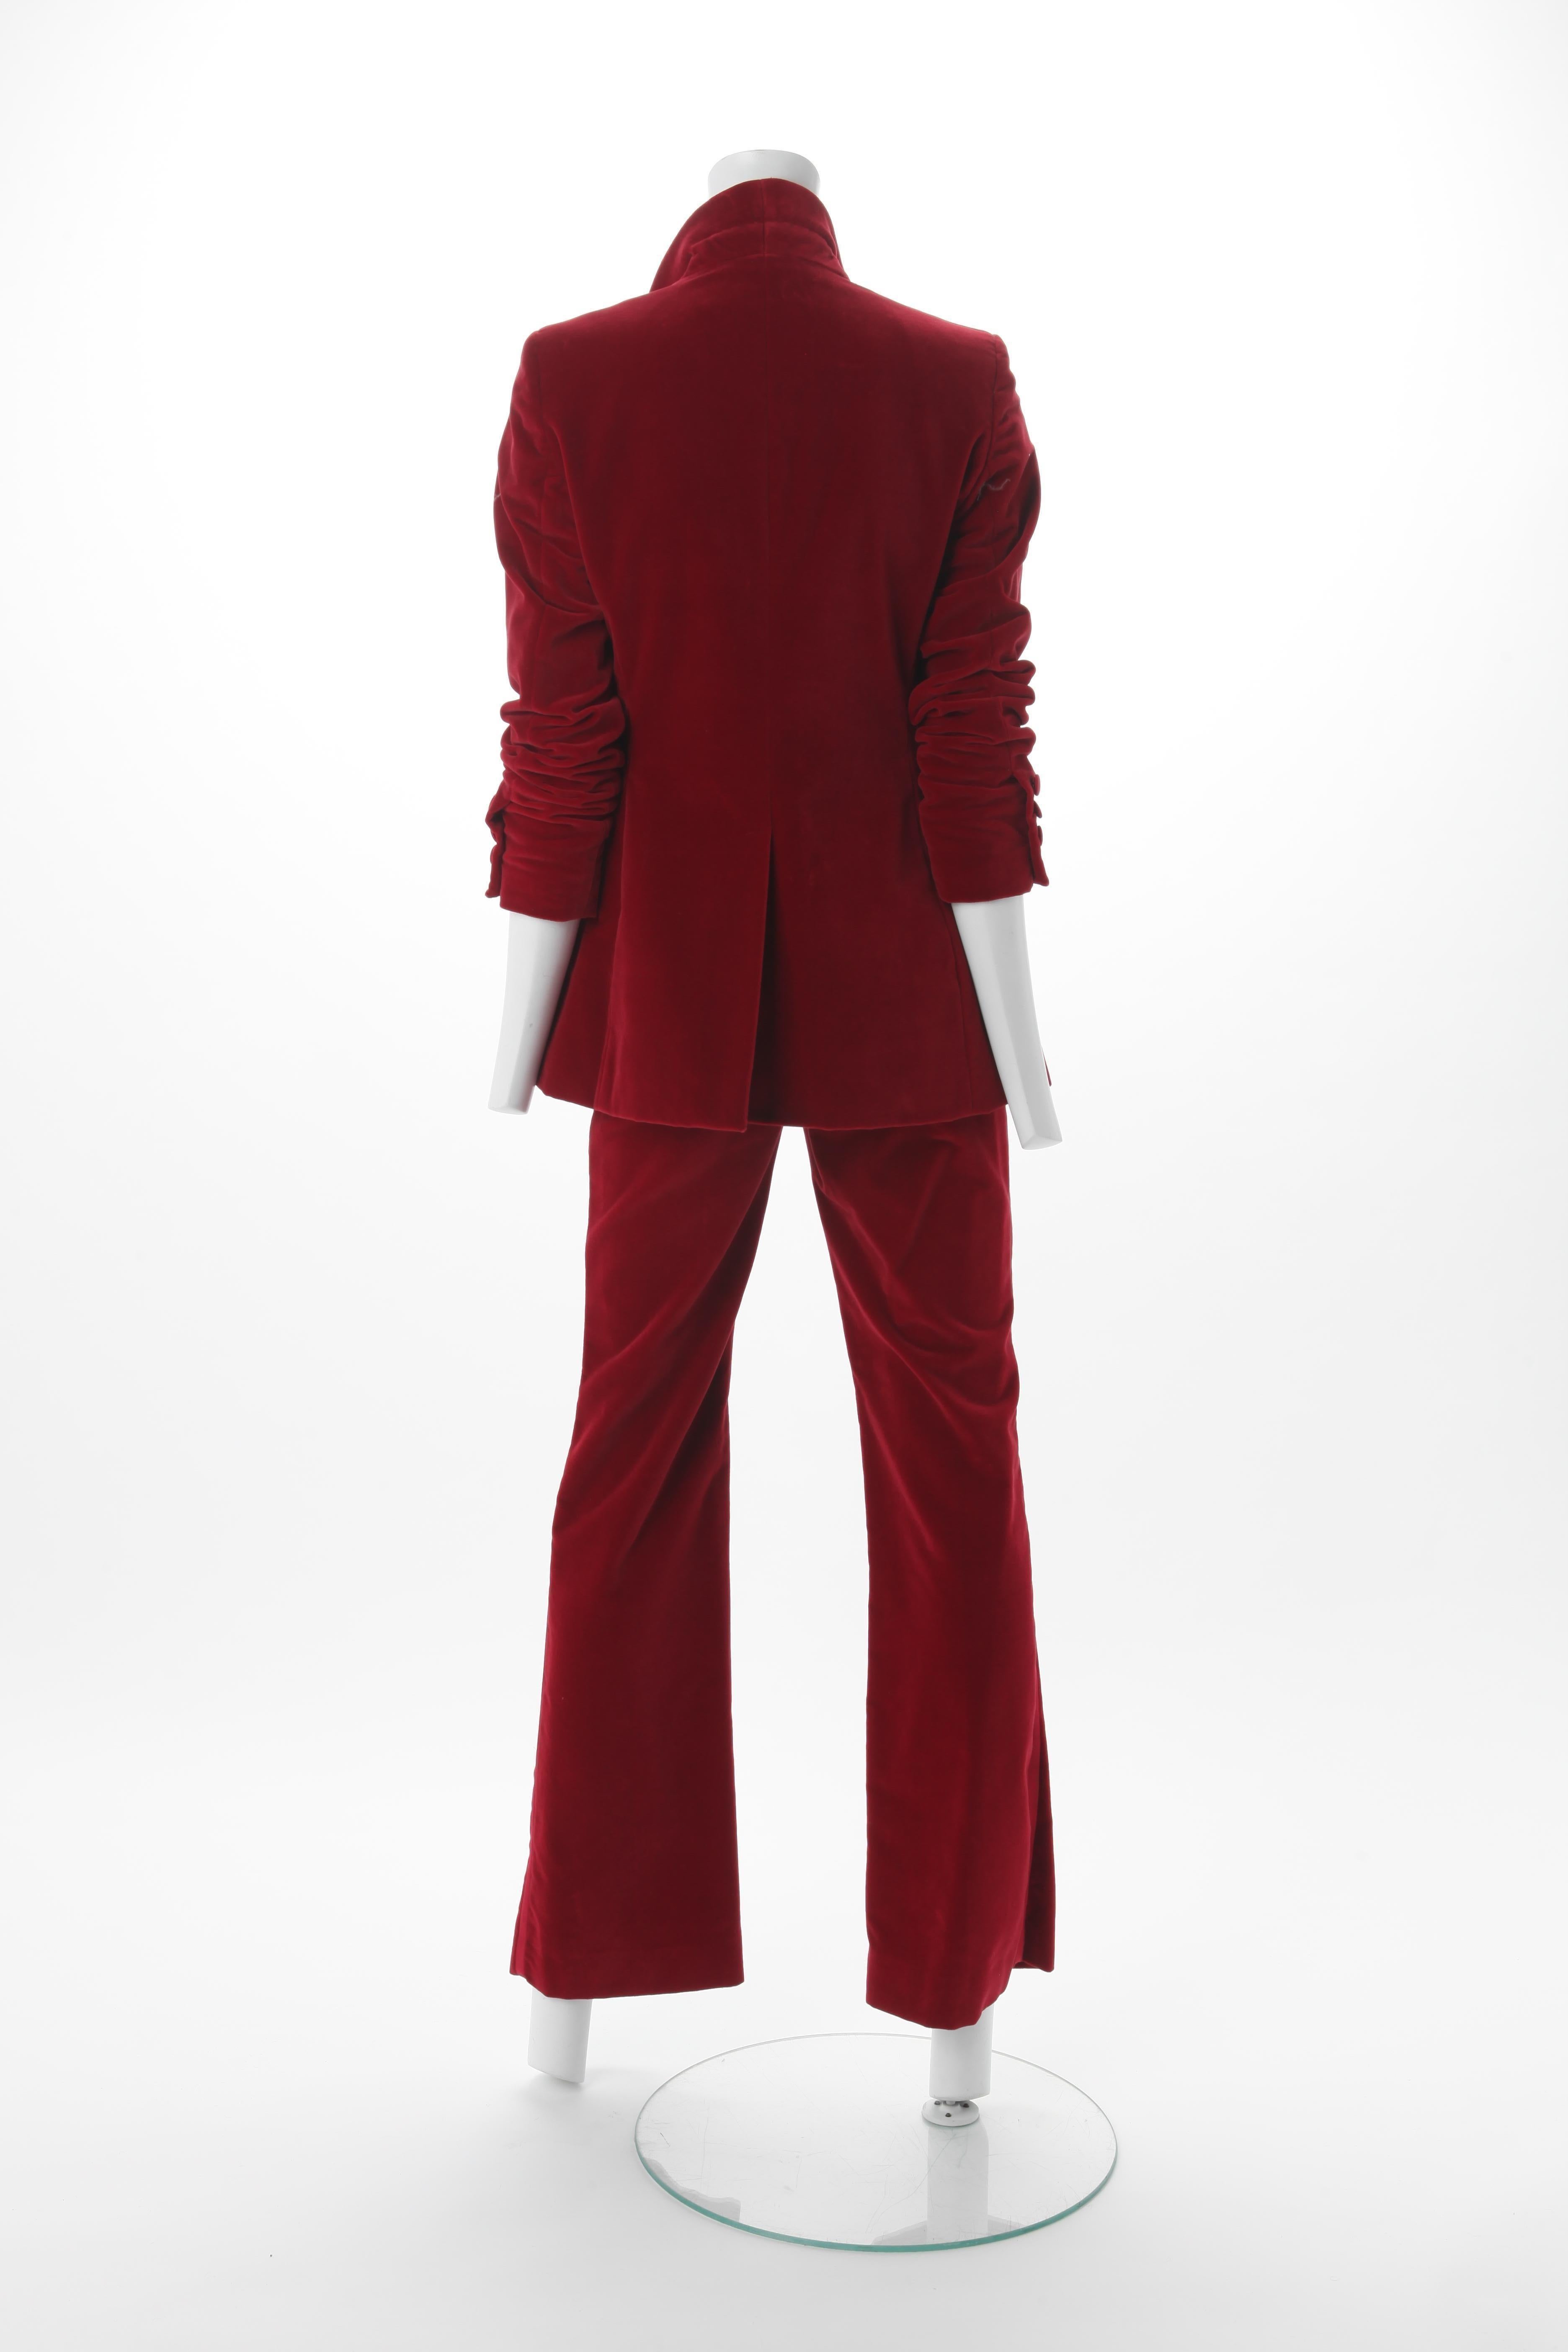 red velvet gucci suit